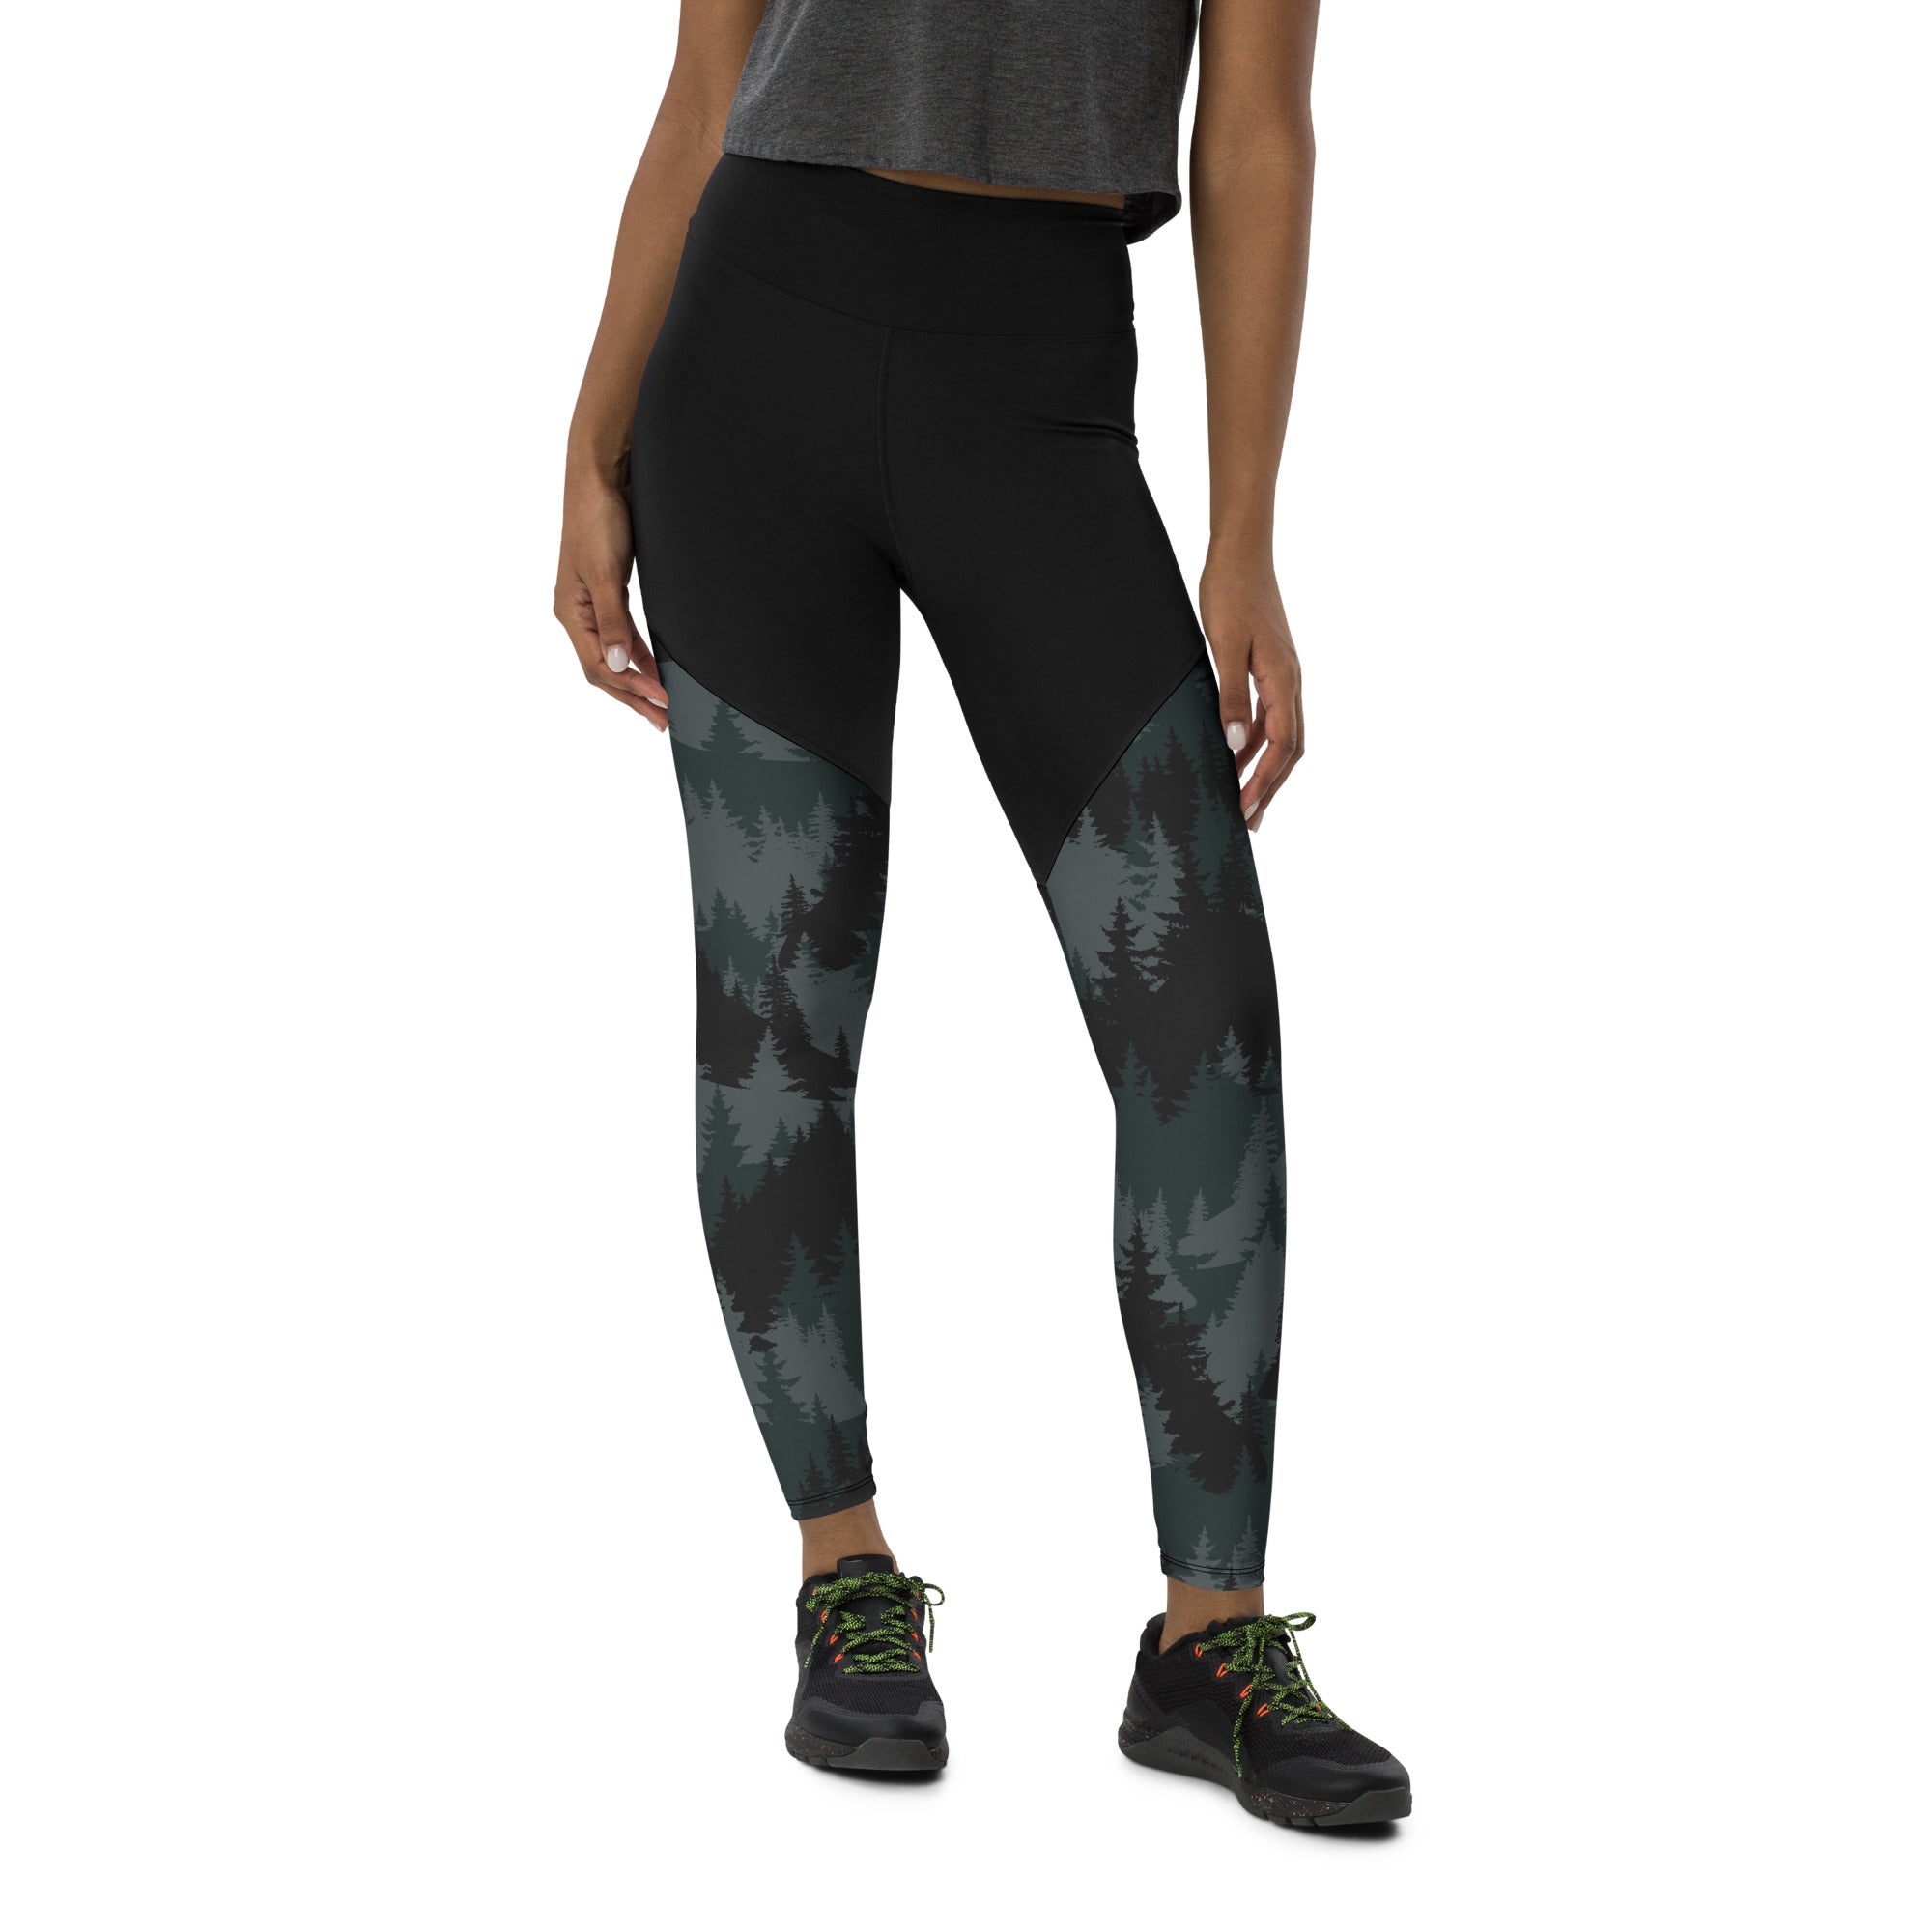 Women's 7/8 length Squat Proof Sport Compression Leggings – Berry